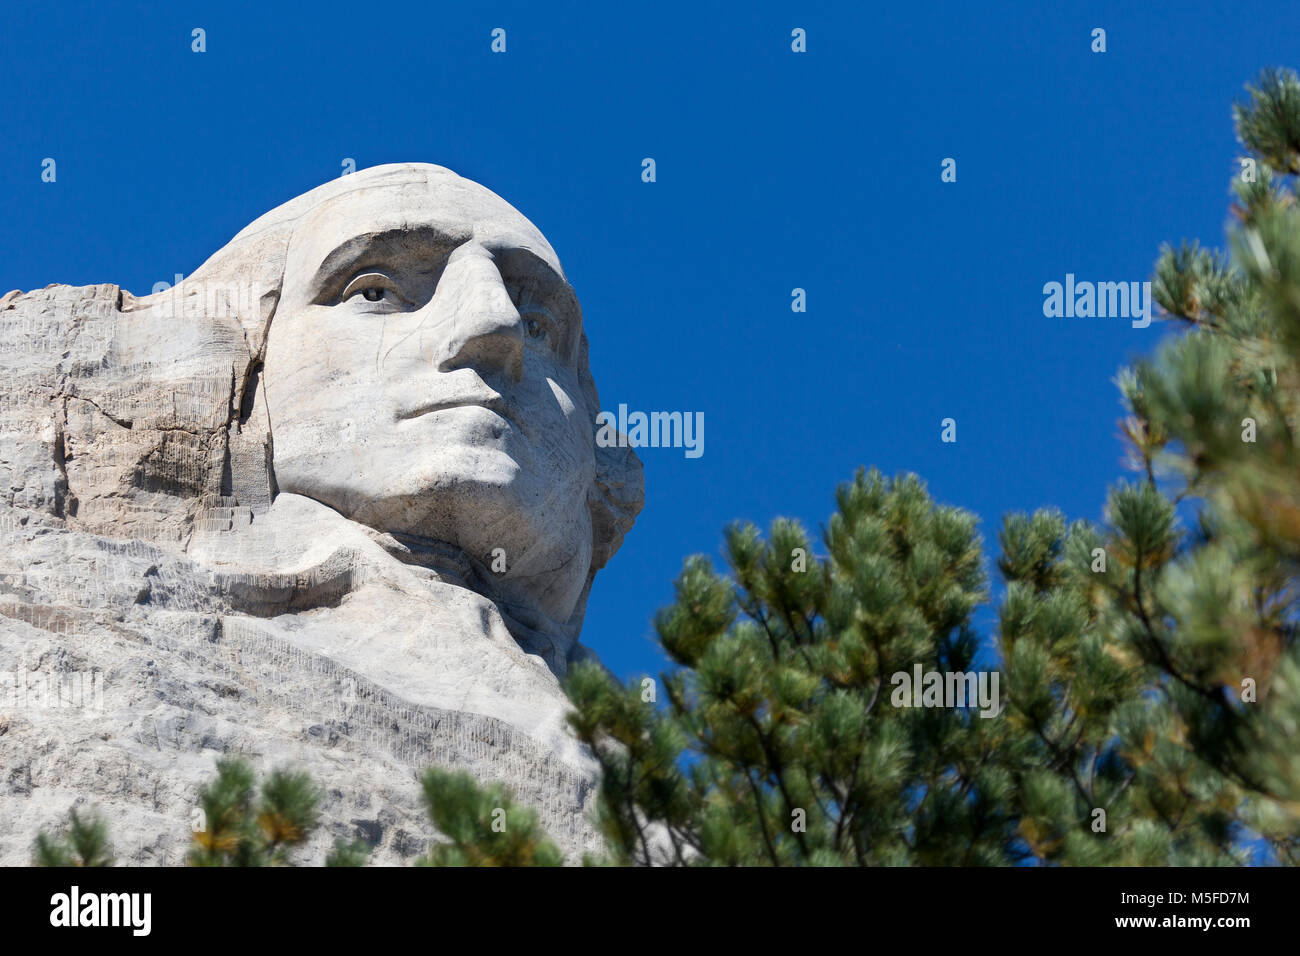 SD 00010-00 ... South Dakota - Presedent George Washington geschnitzt in einem Berghang am Mount Rushmore National Memorial. Stockfoto